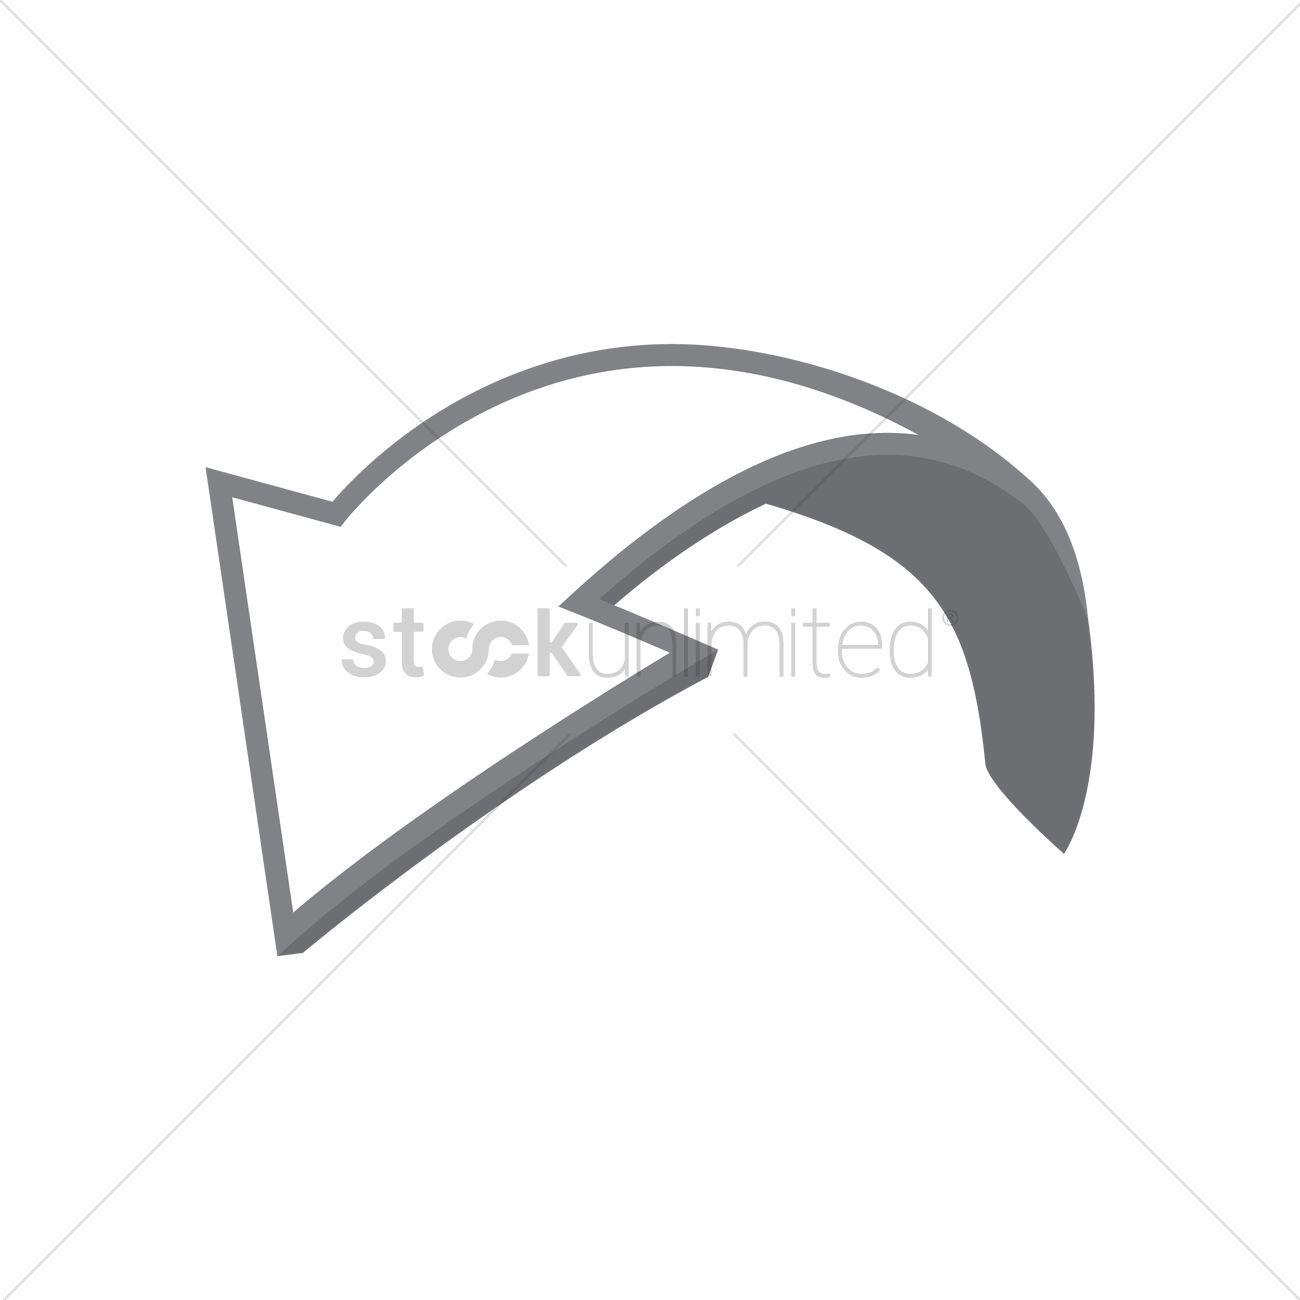 White Curved Arrow Logo - Curved arrow Vector Image